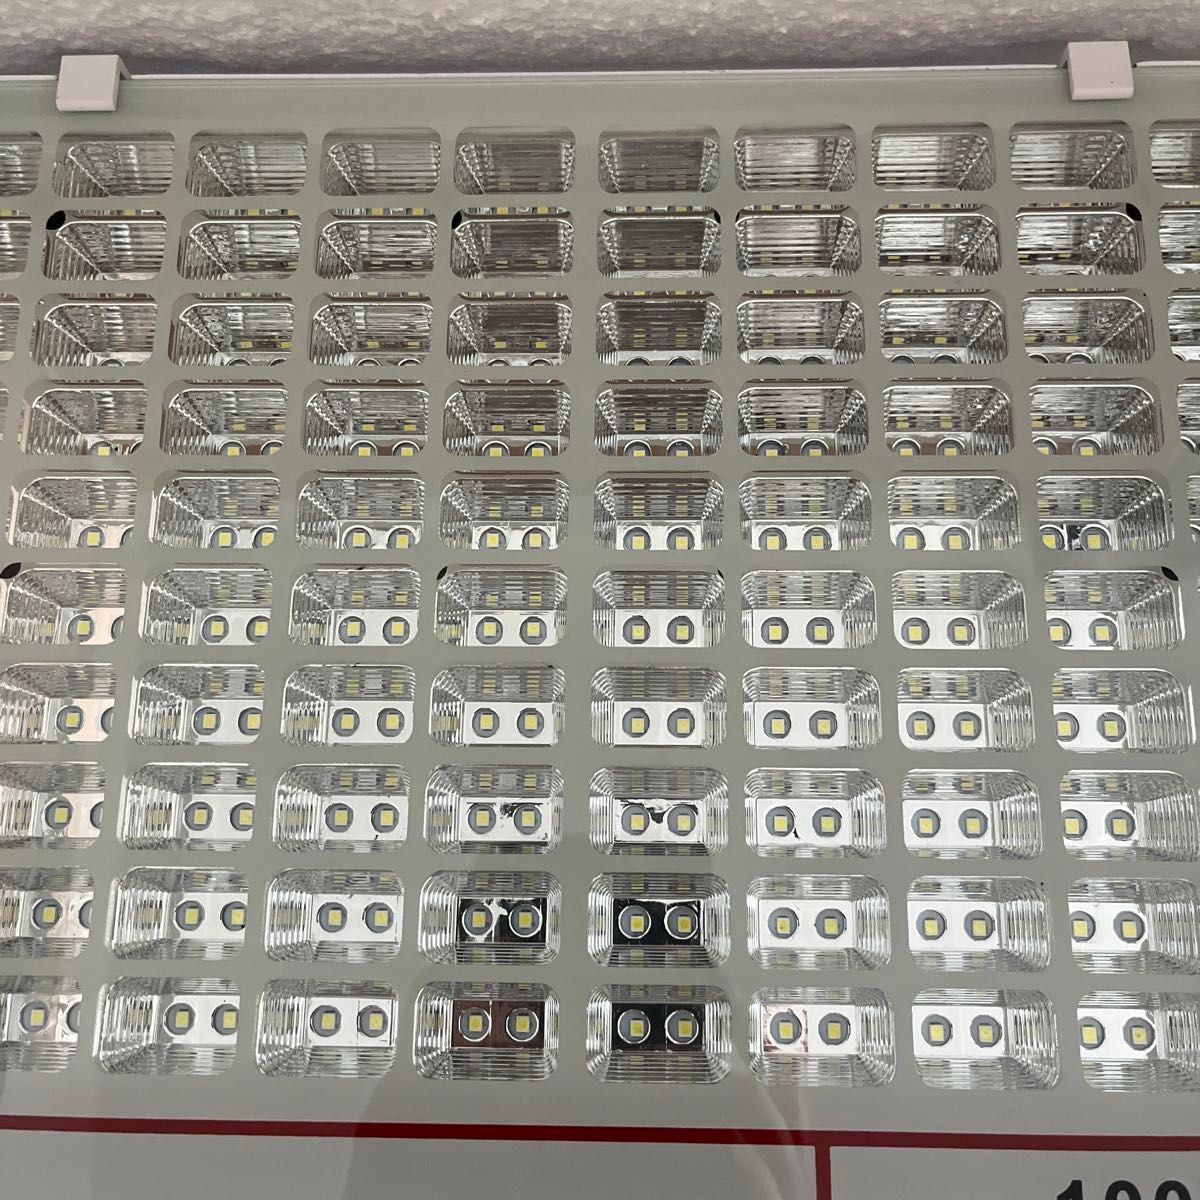 超薄型・超高輝度 LED投光器 100W 10000LM 広い範囲照射可能 放熱性高い 耐久型 防塵防水レベルIP66同等以上　